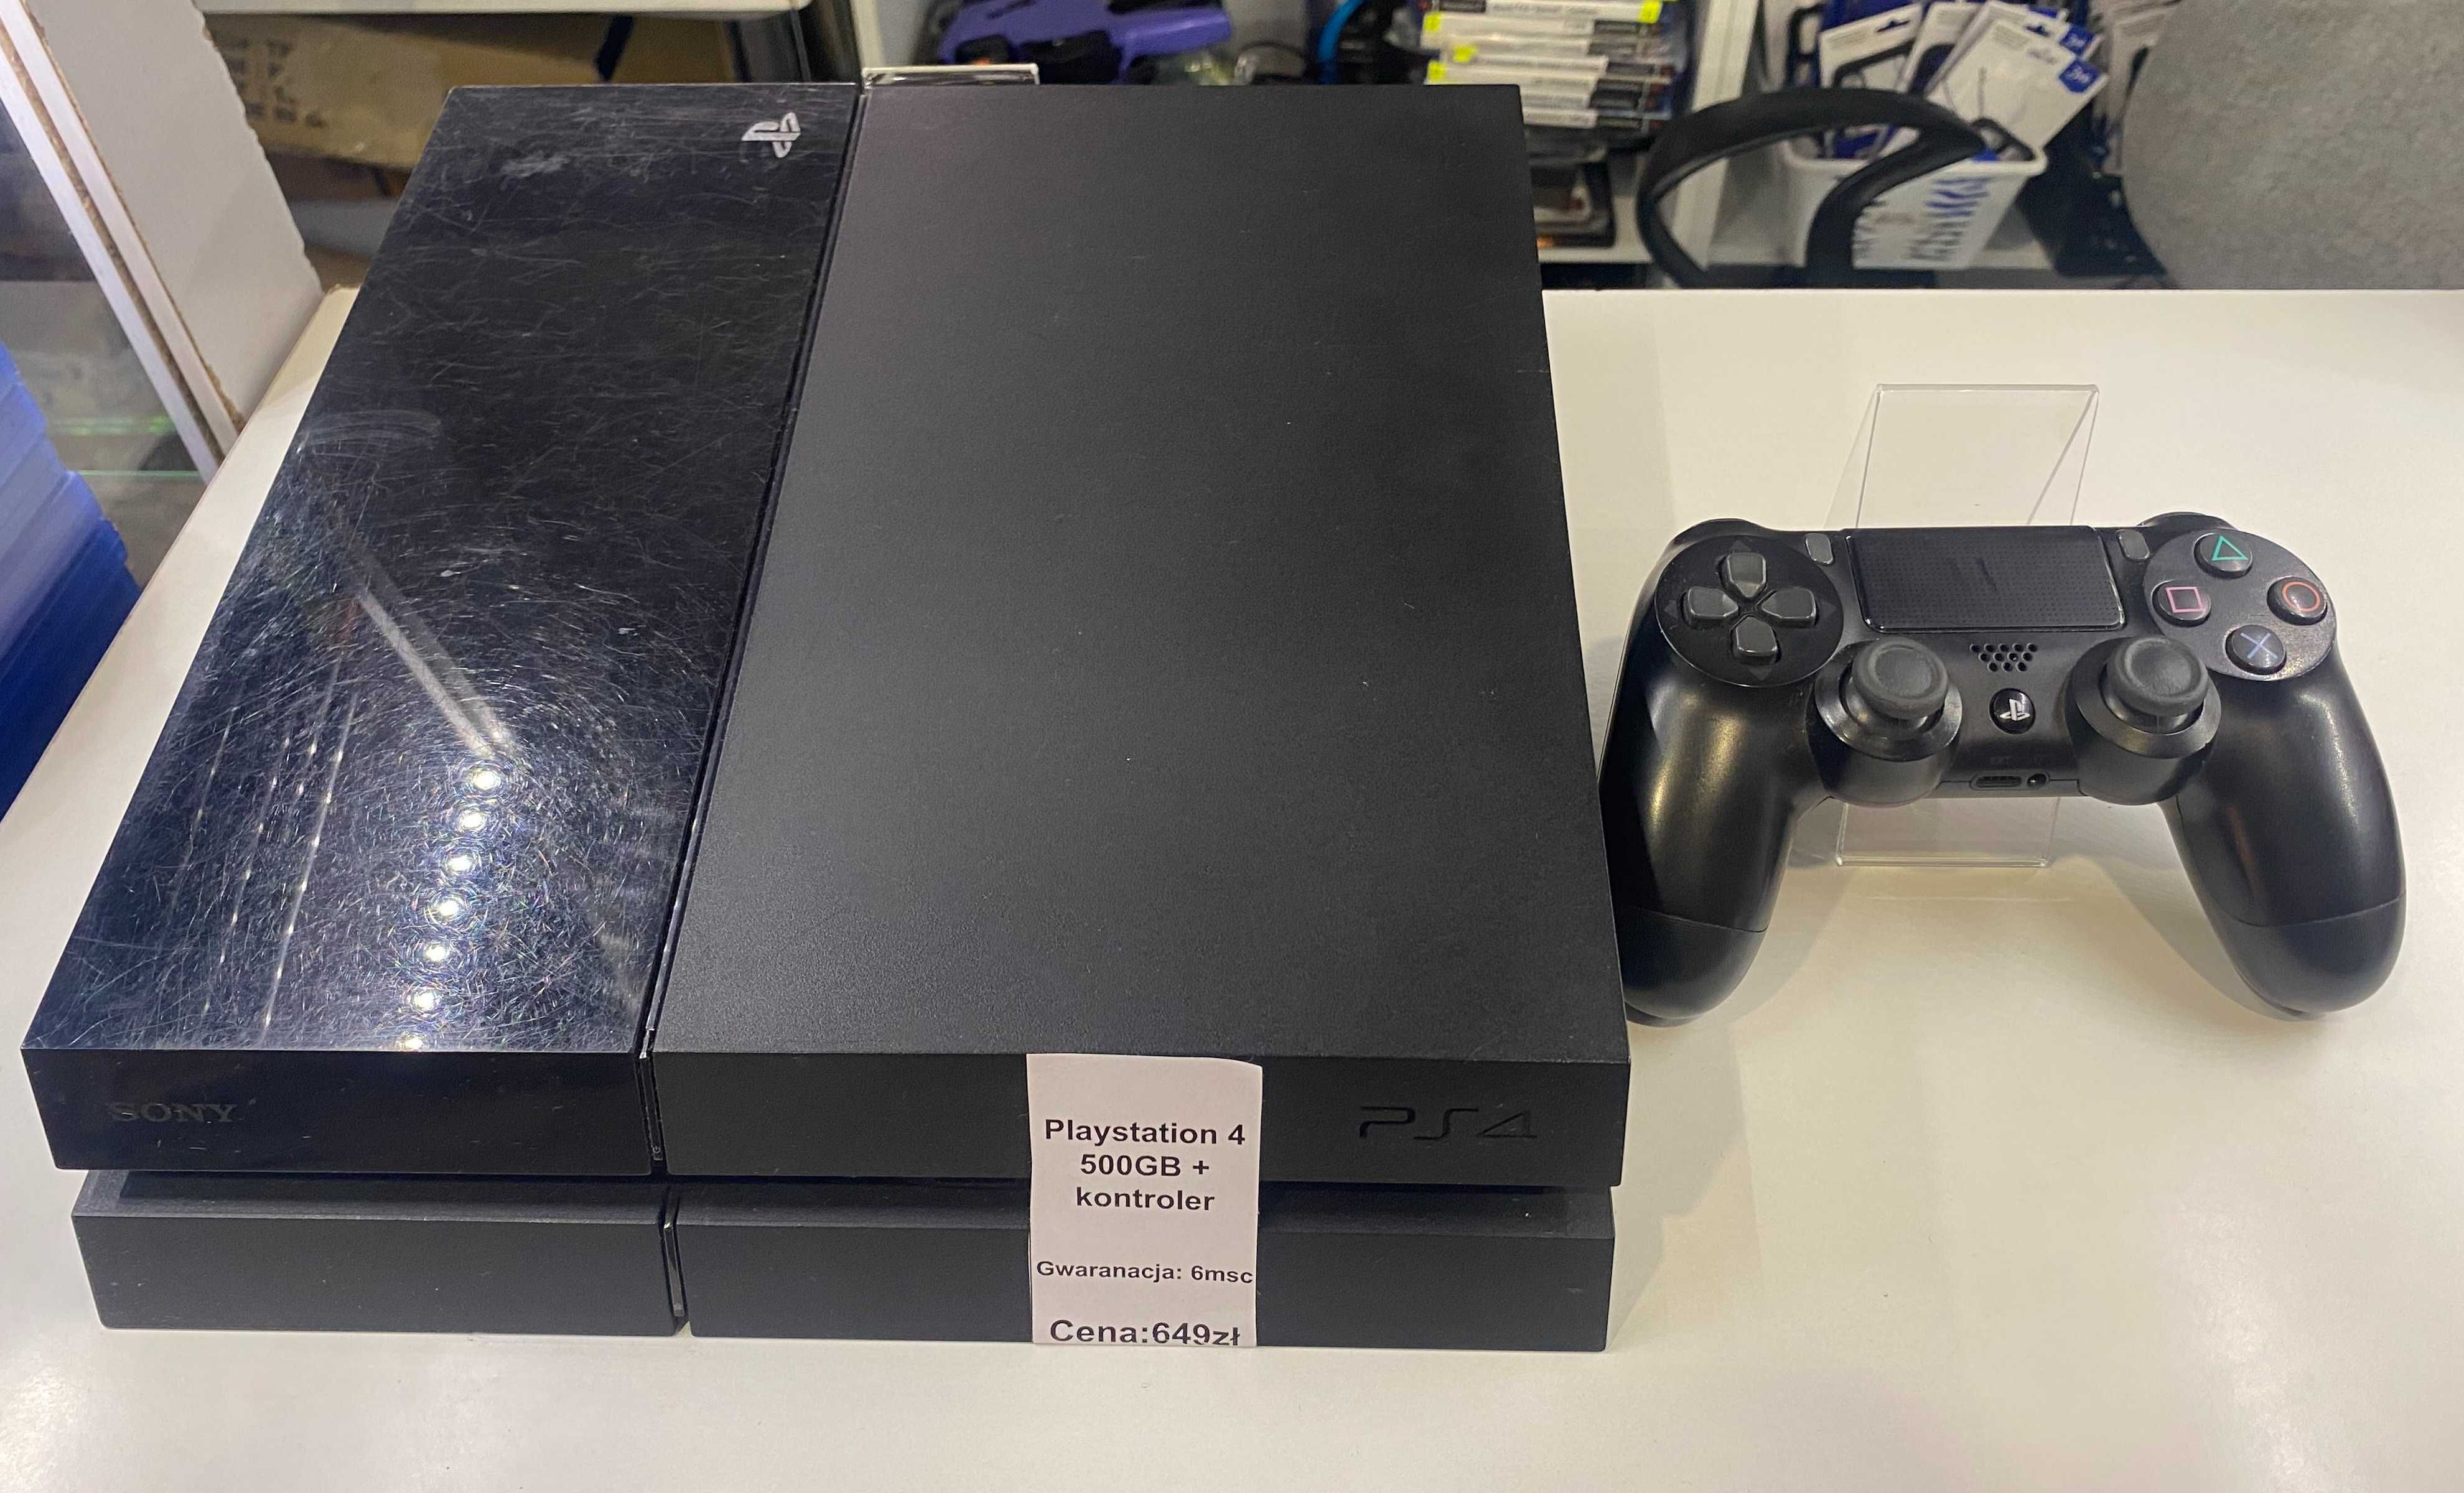 Playstation 4 500GB + kontroler GWARANCJA 6msc